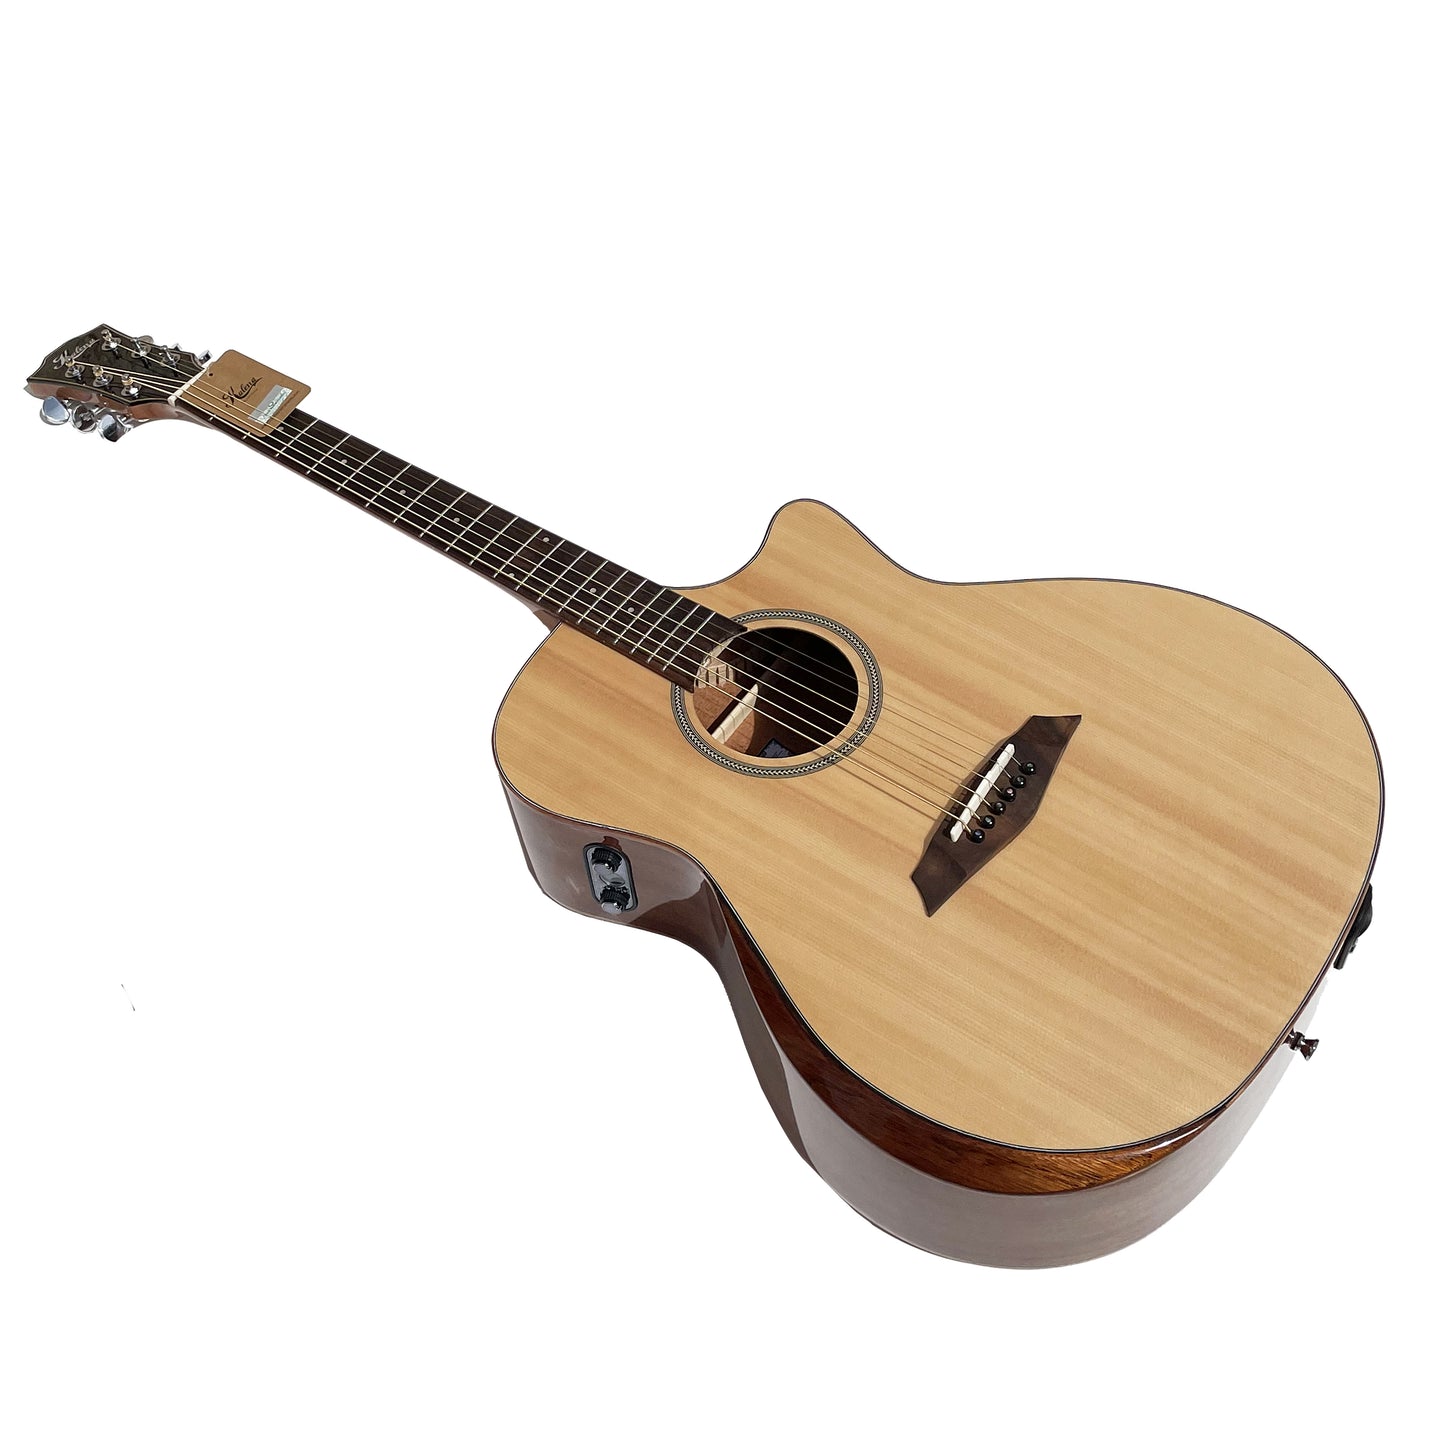 Kalena SST813FX 41" Solid Spruce Top Acoustic Guitar with FX Complete Set